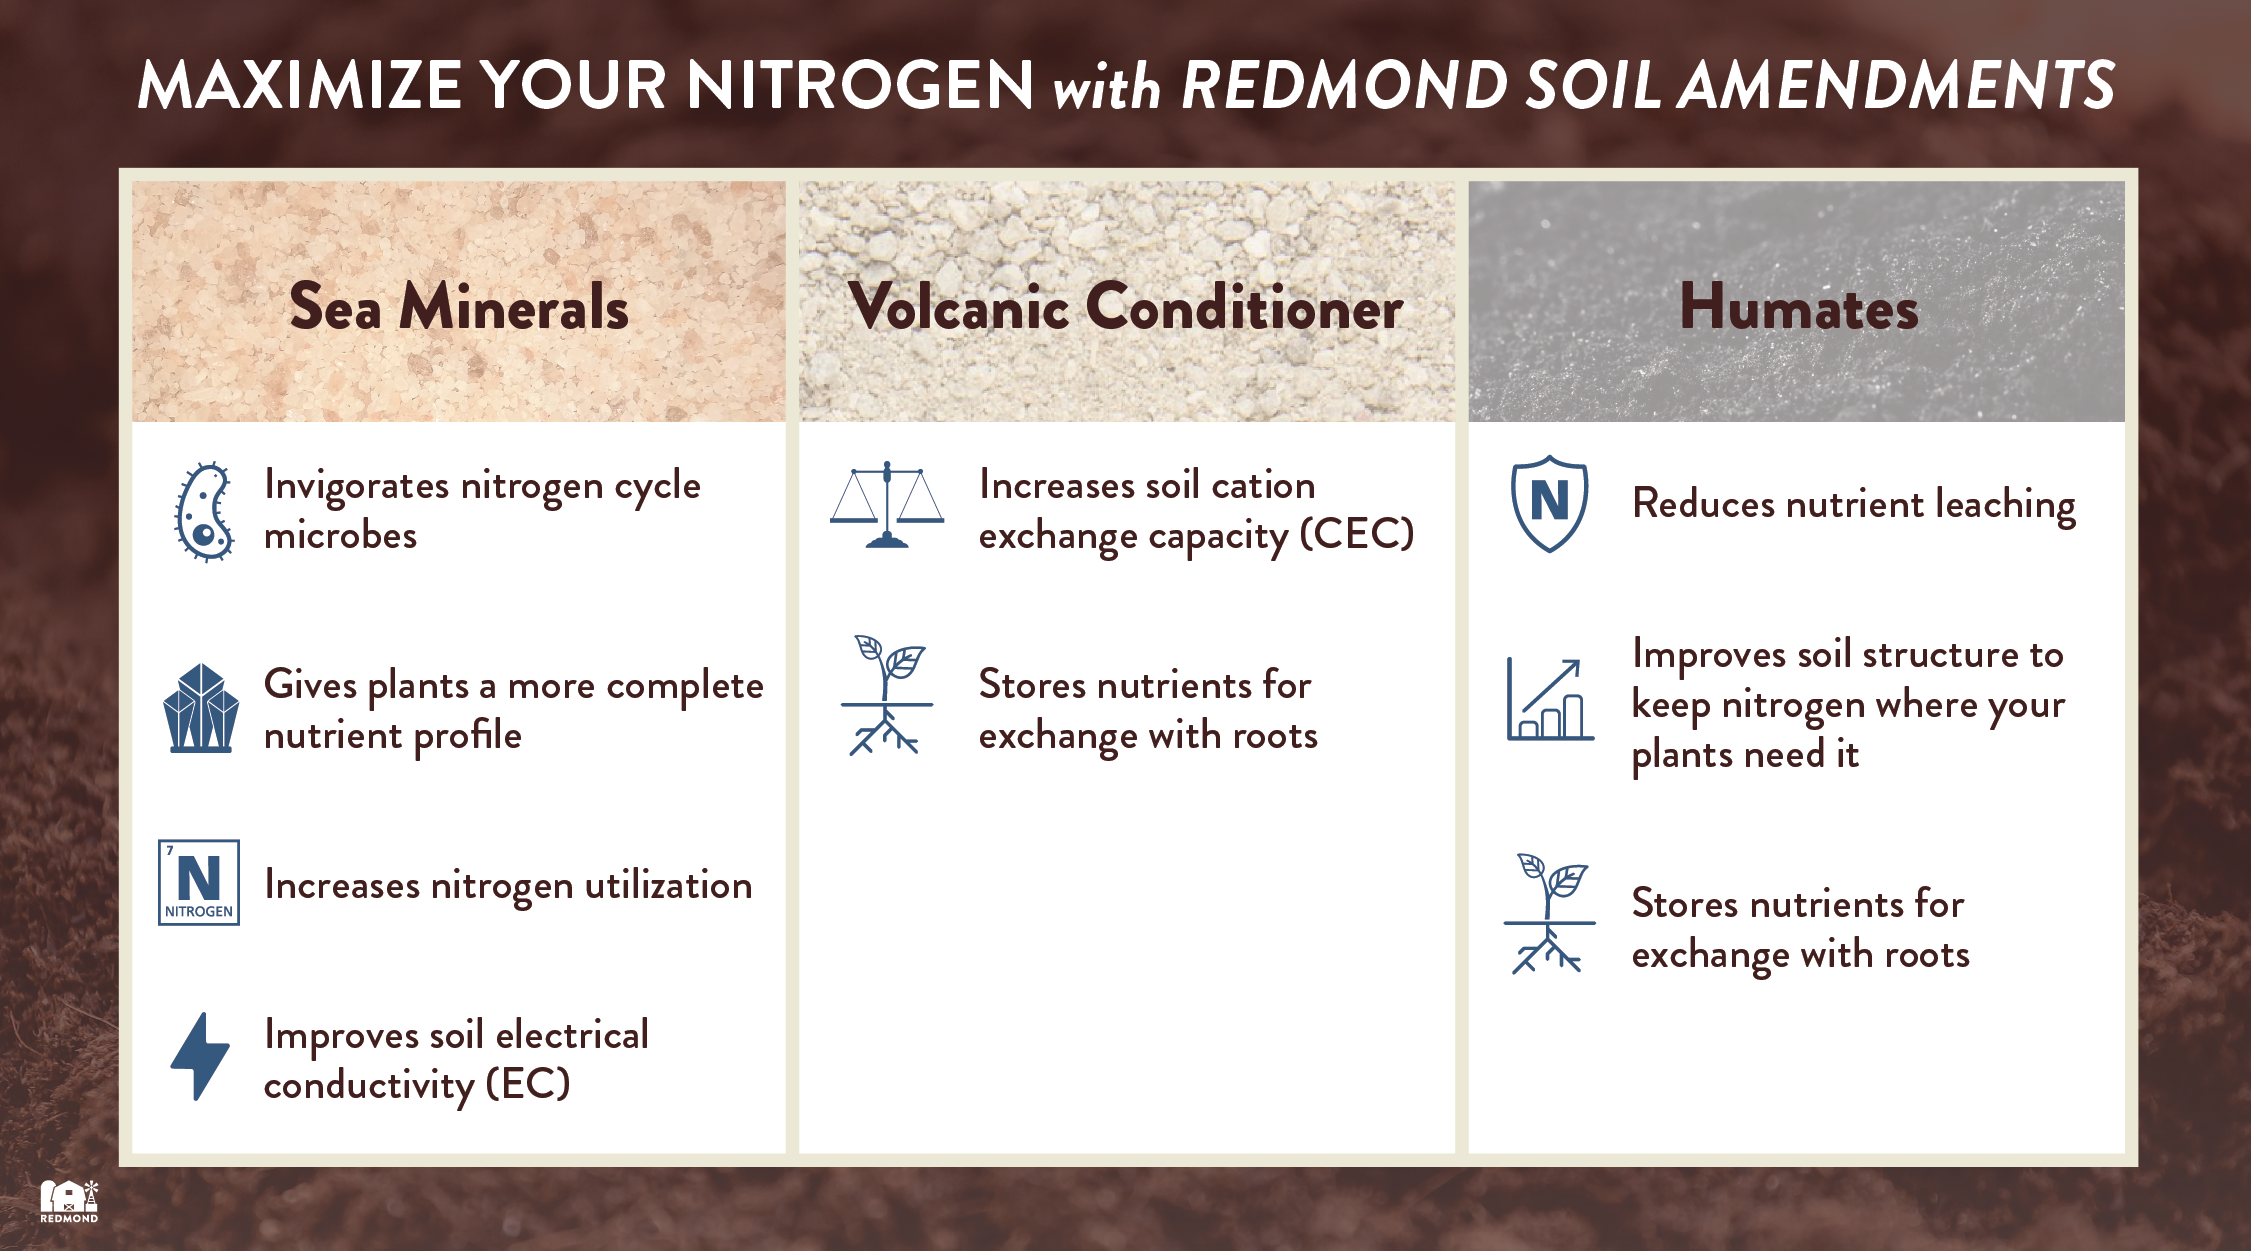 Redmond minerals can help you maximize your nitrogen utilization